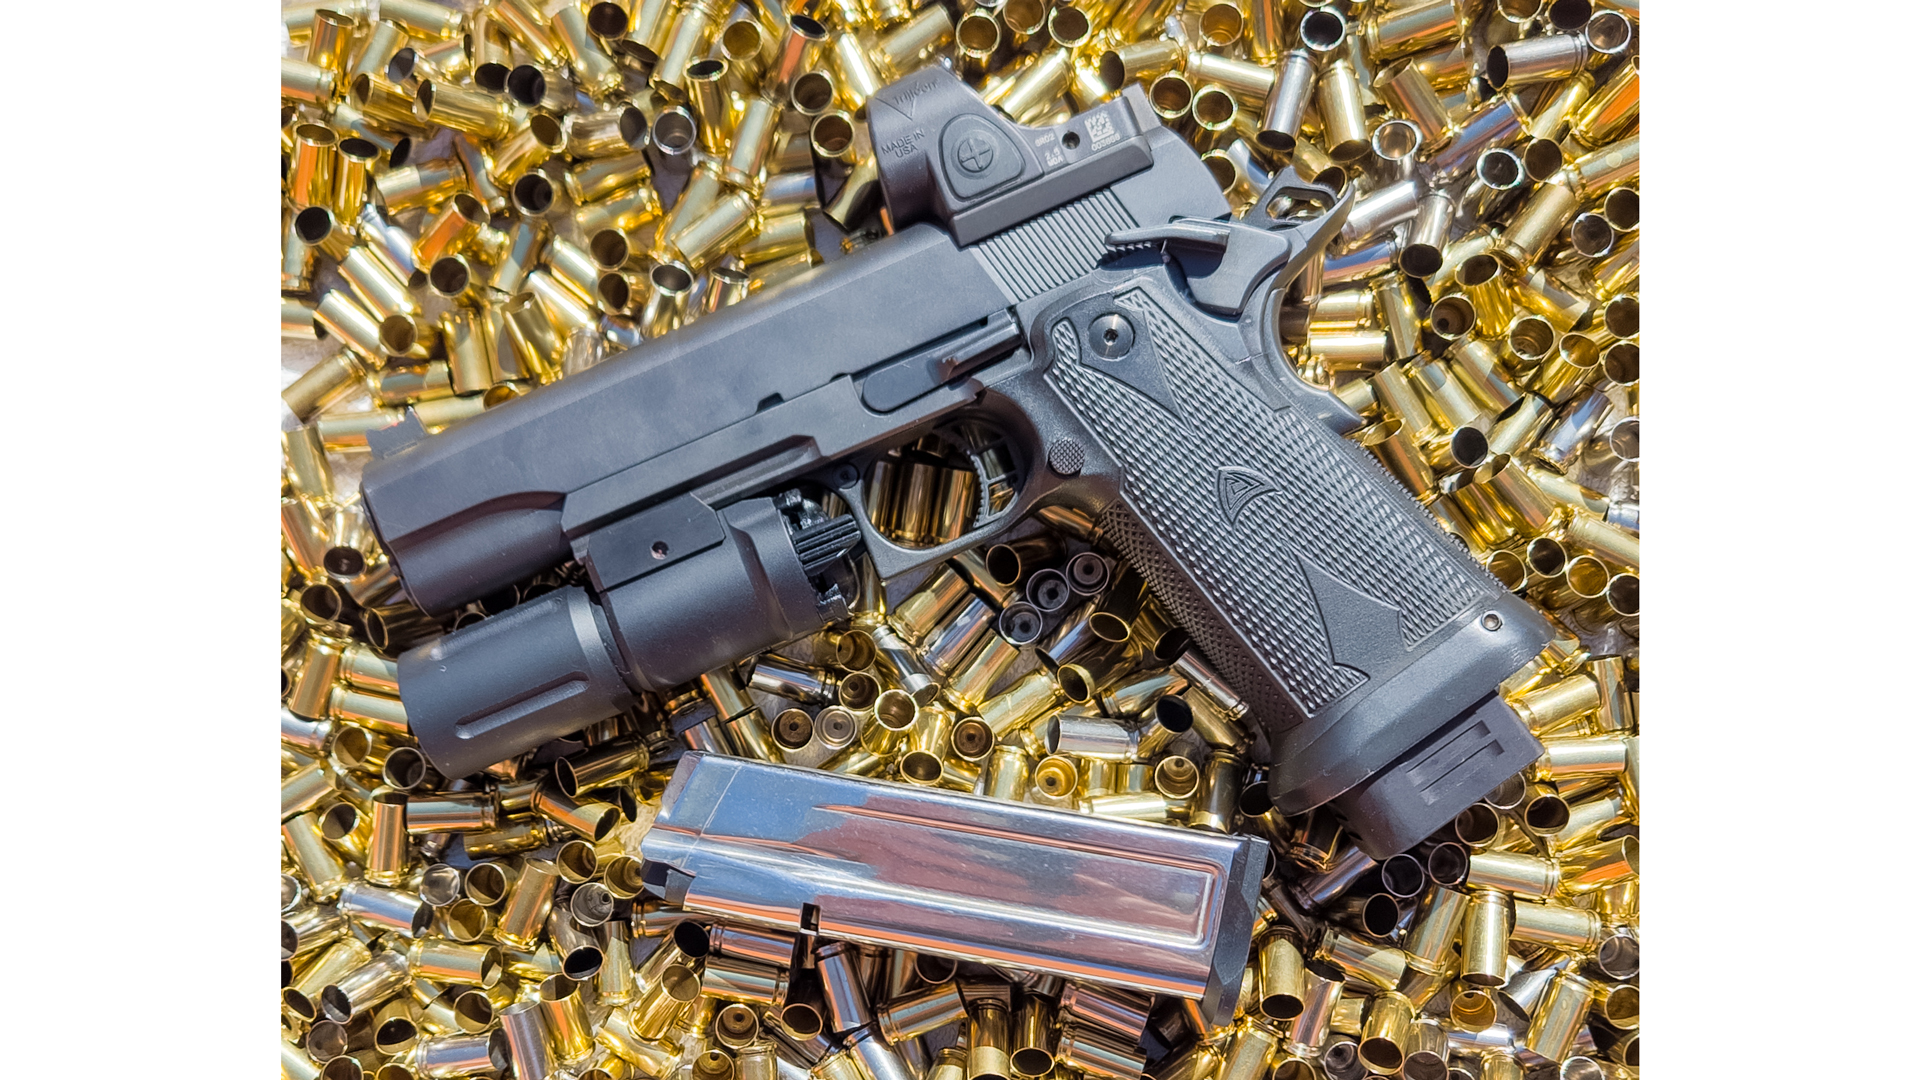 Alchemy Custom Weaponry Quantico HiCap pistol left-side view on empty brass cases